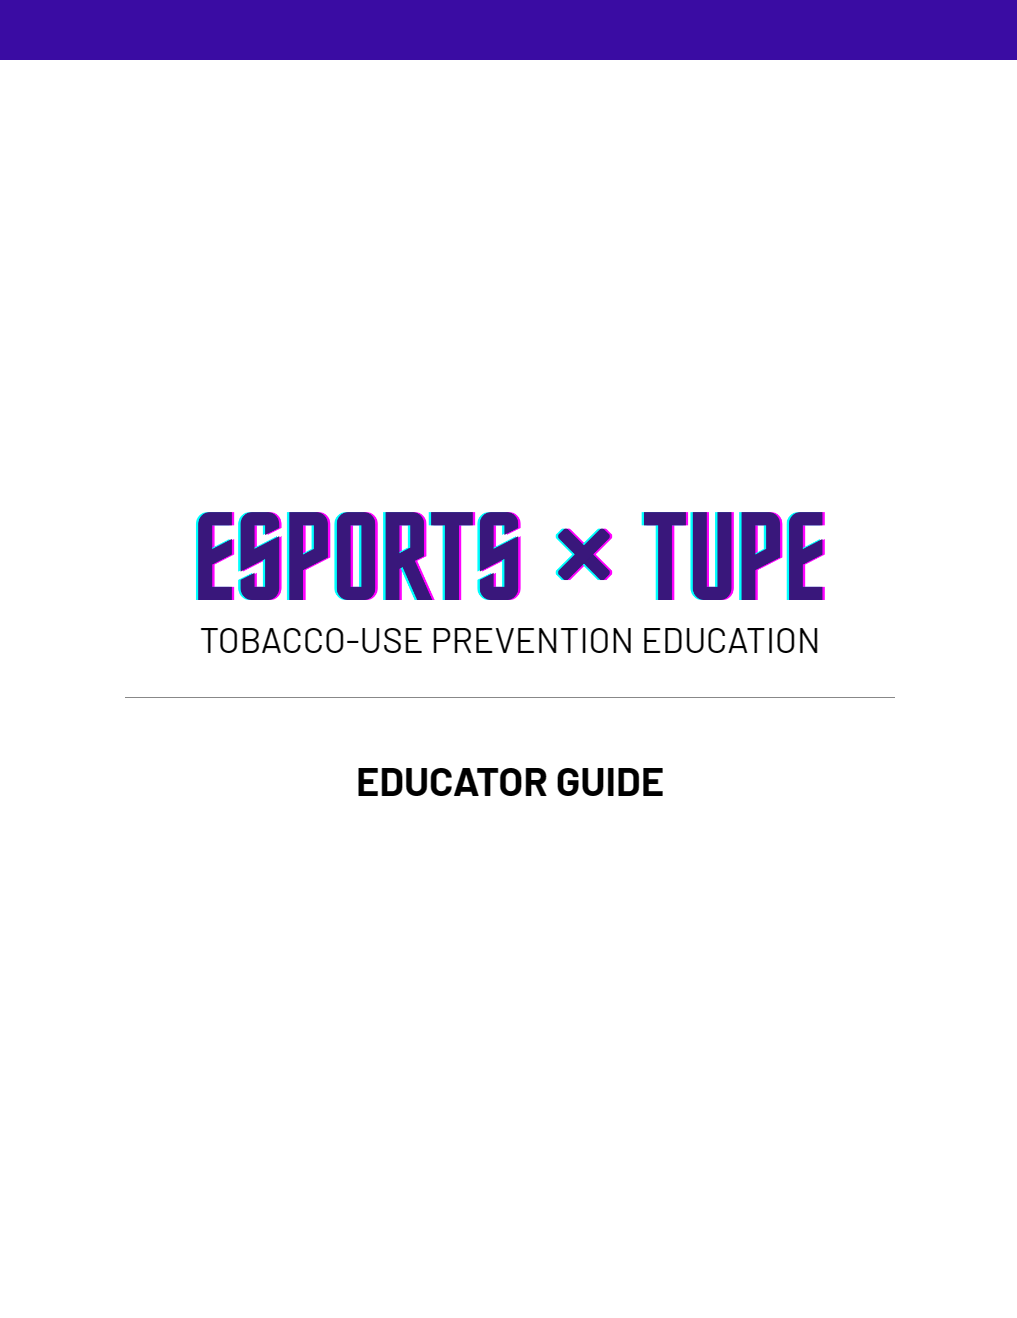 ext-educator-guide-thumbnail.png